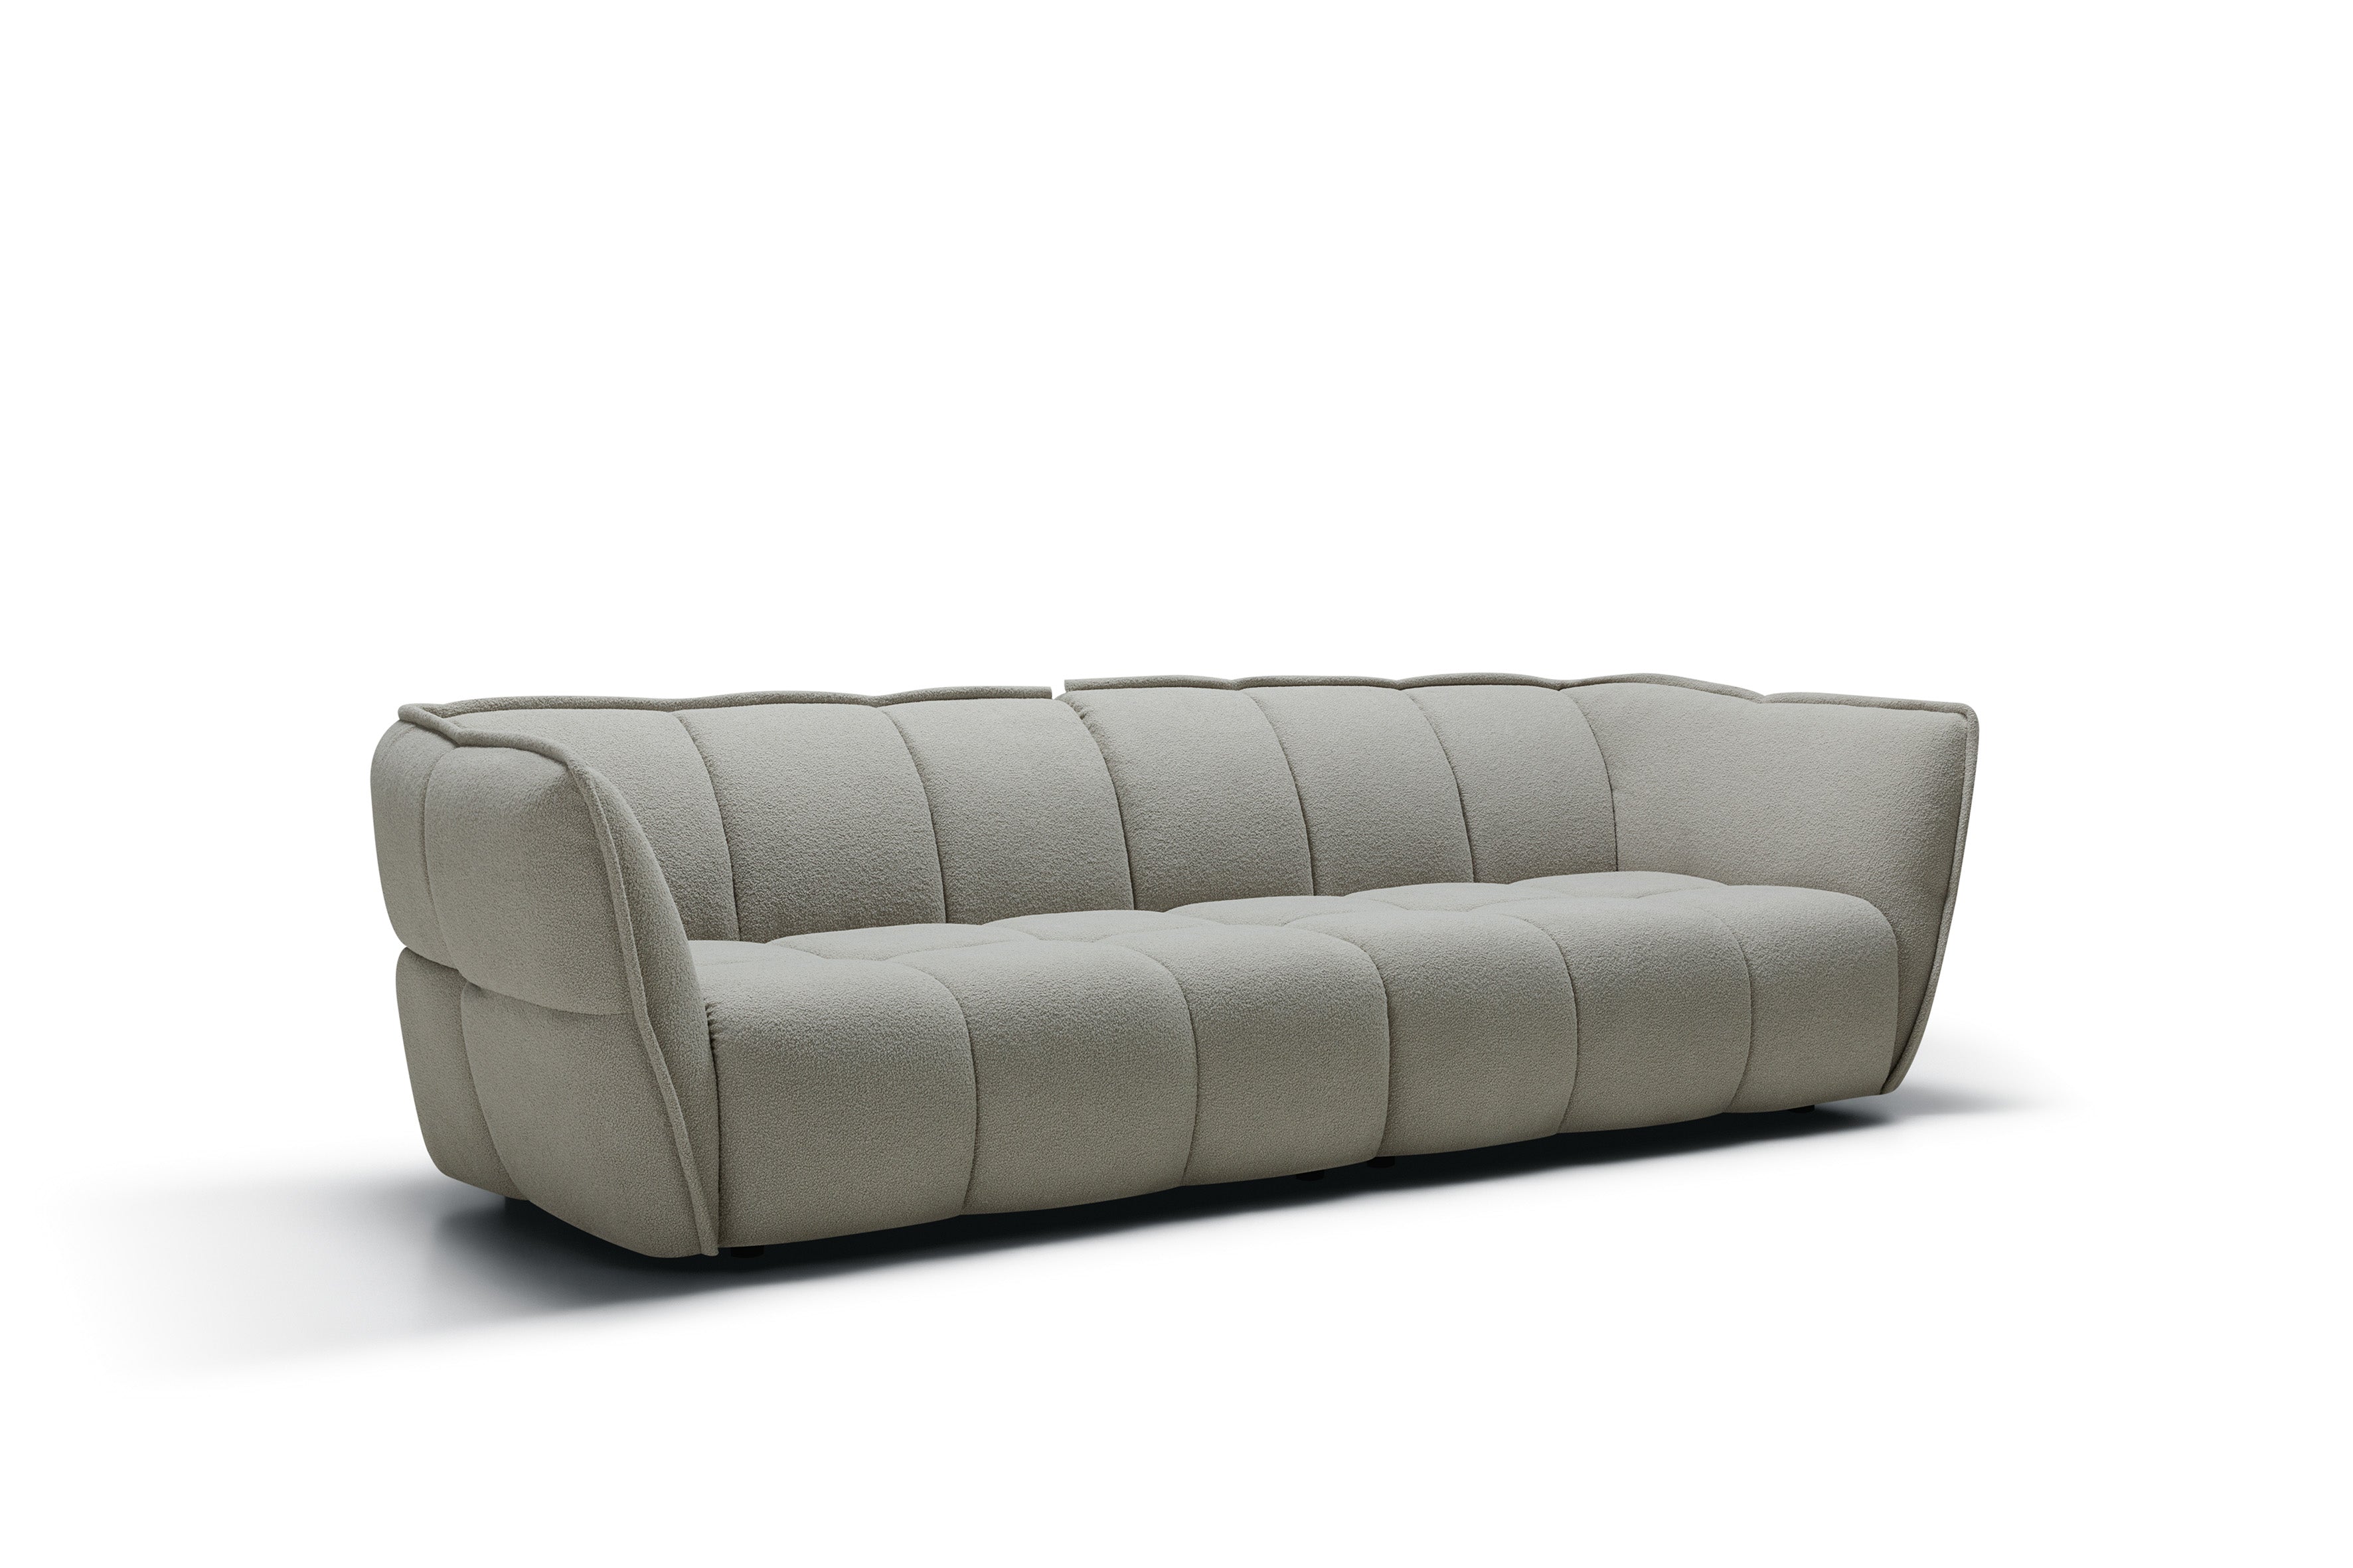 Mastrella Clove 4 Seater Sofa (2 parts)